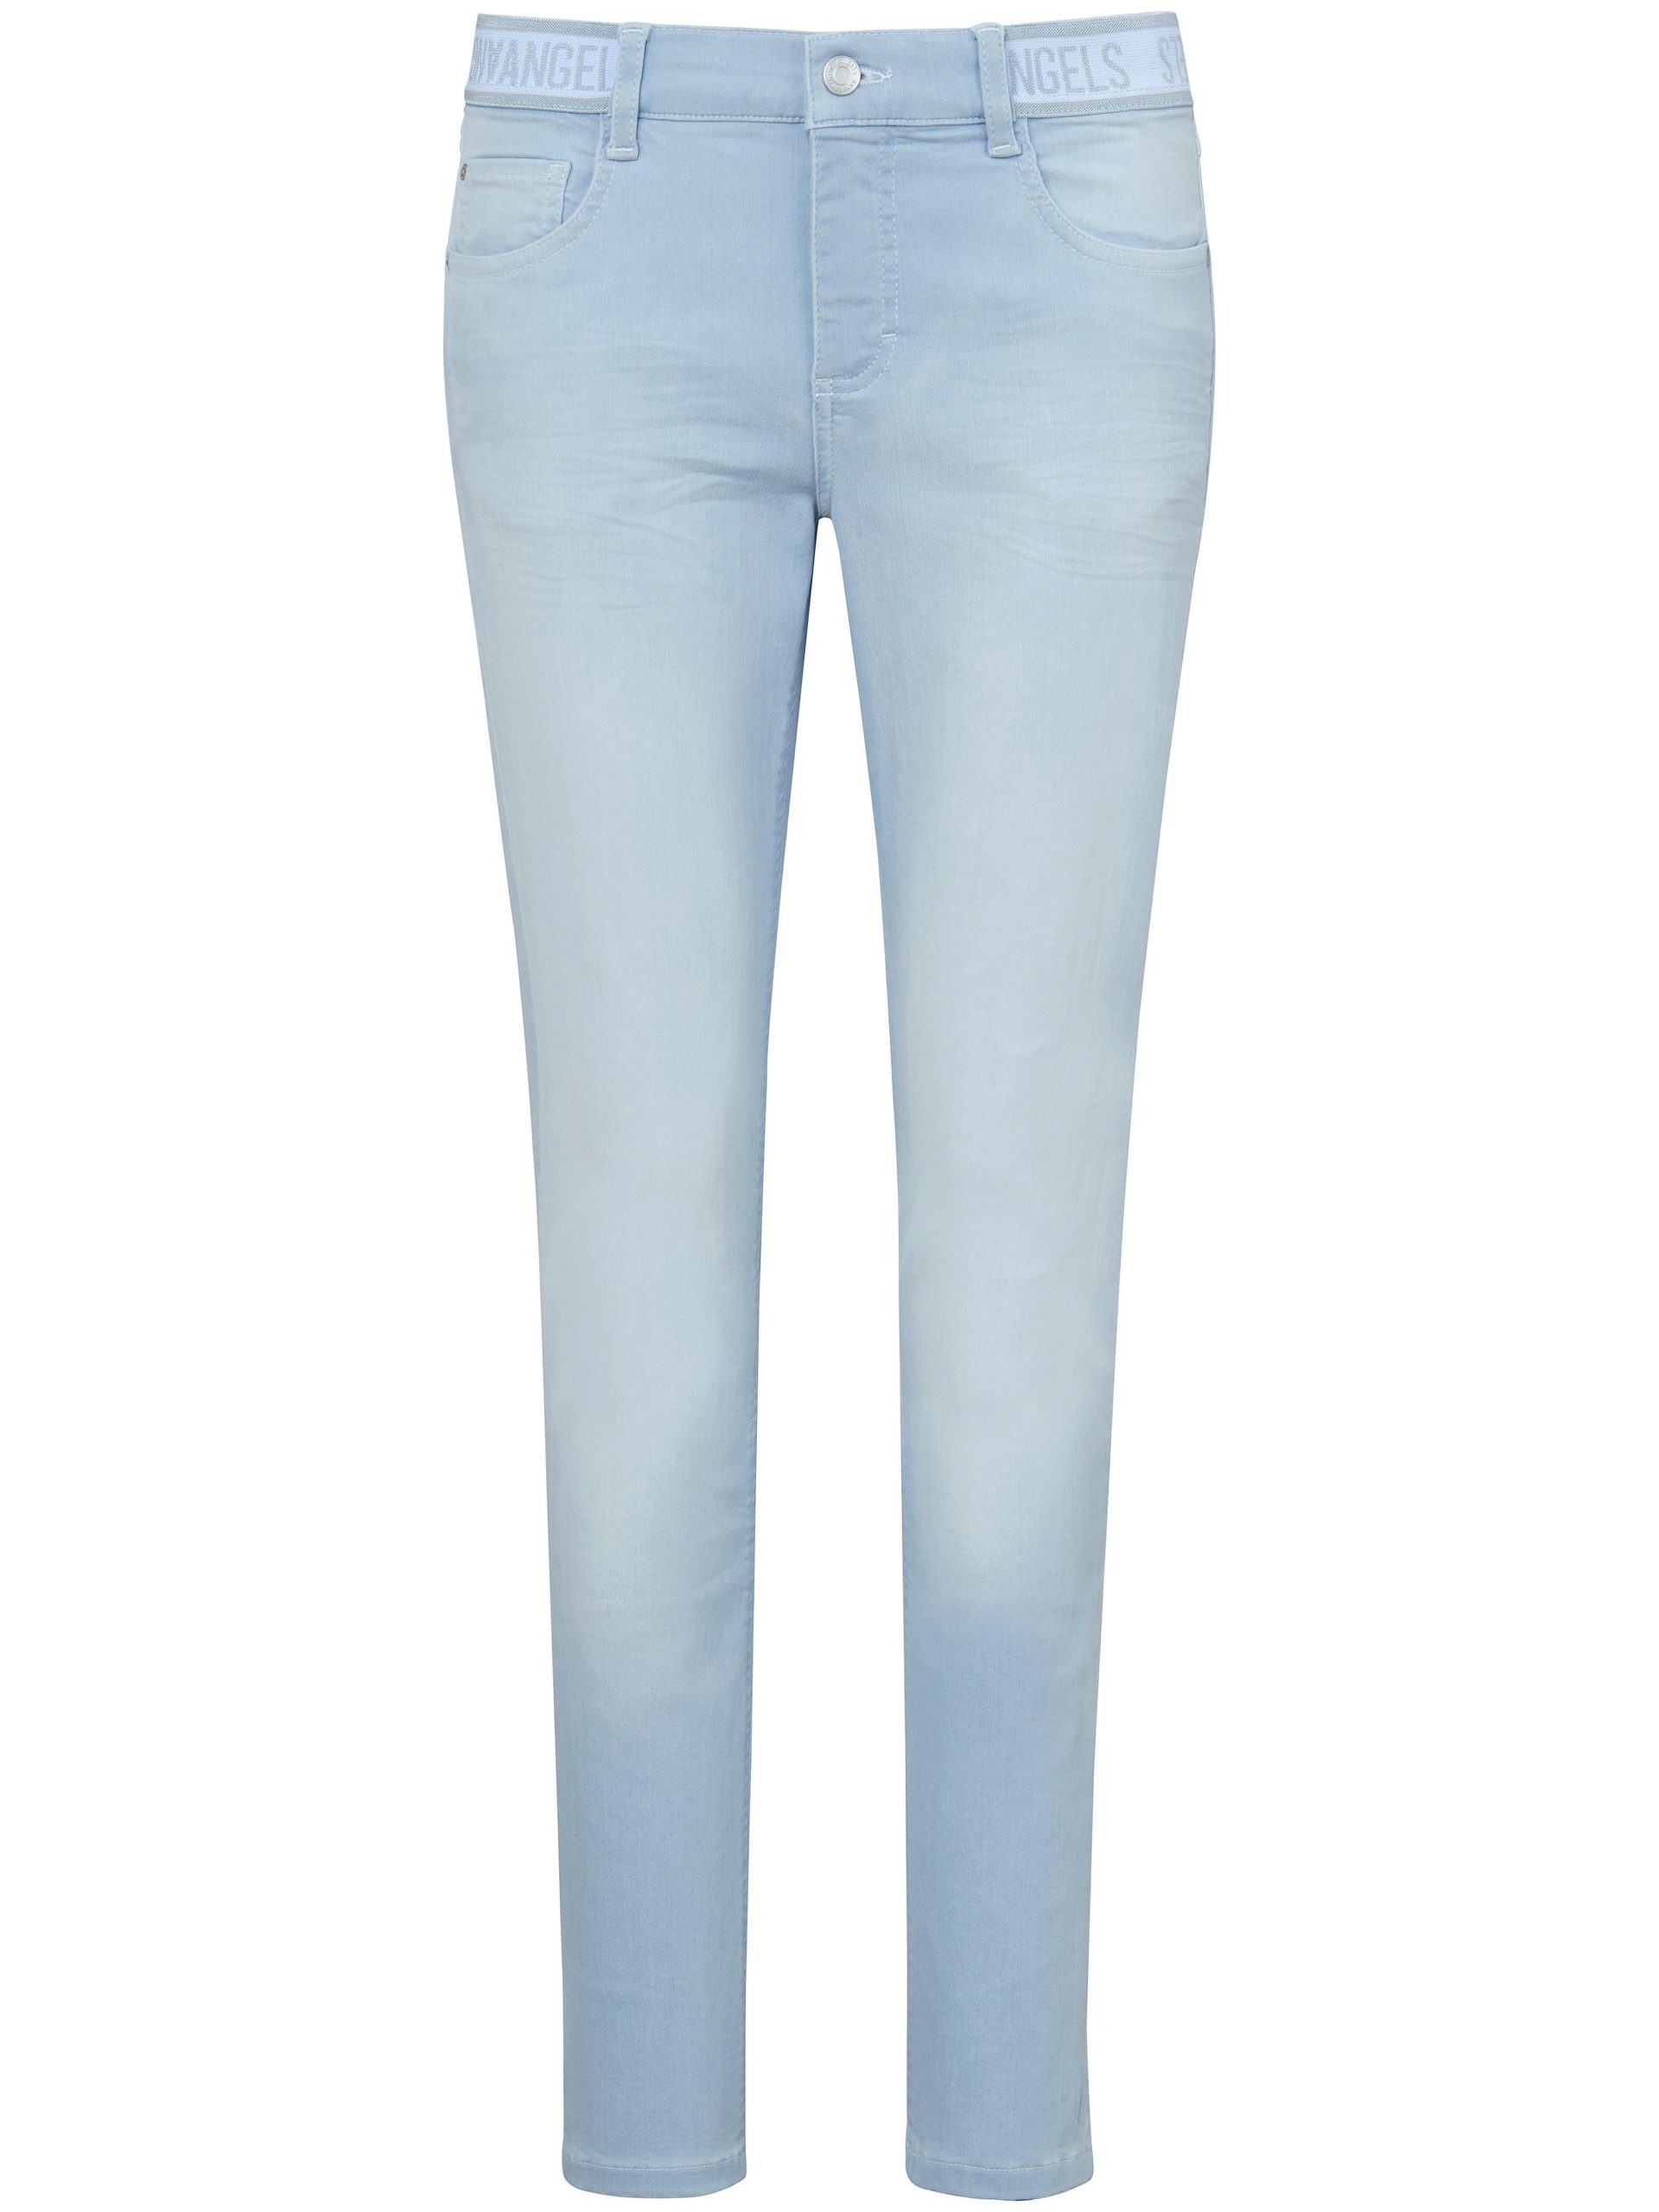 One size fits all-jeans Regular Fit Van ANGELS denim Kopen